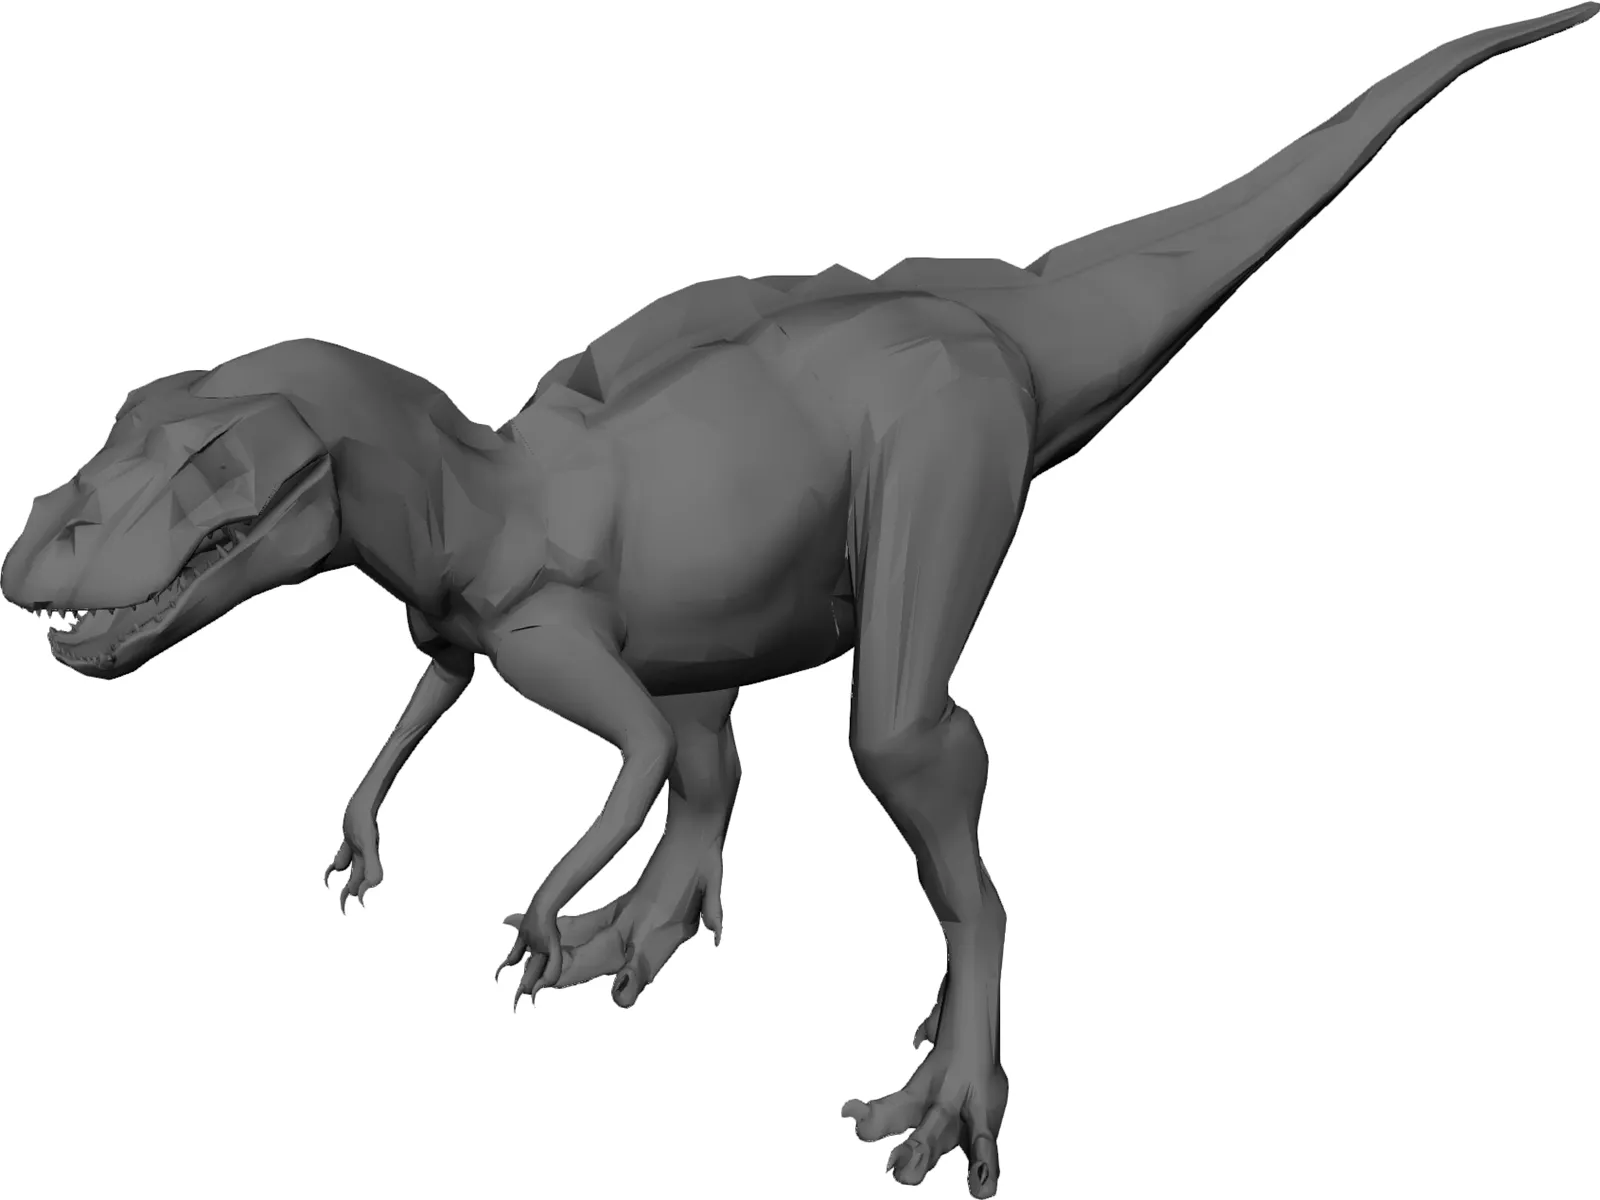 Acrocanthosaurus 3D Model